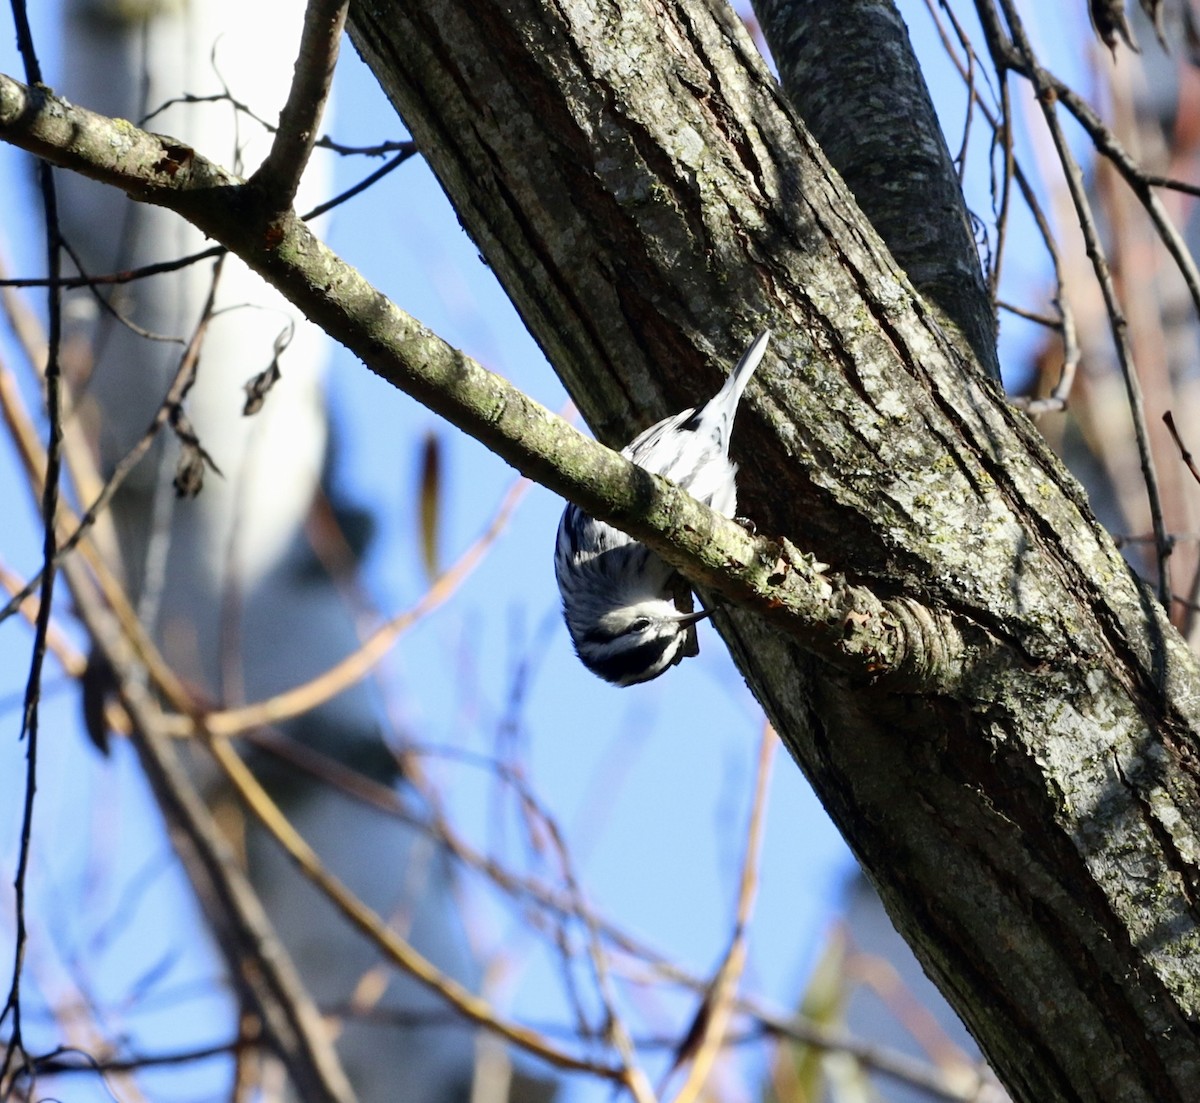 Black-and-white Warbler - A Kopitov